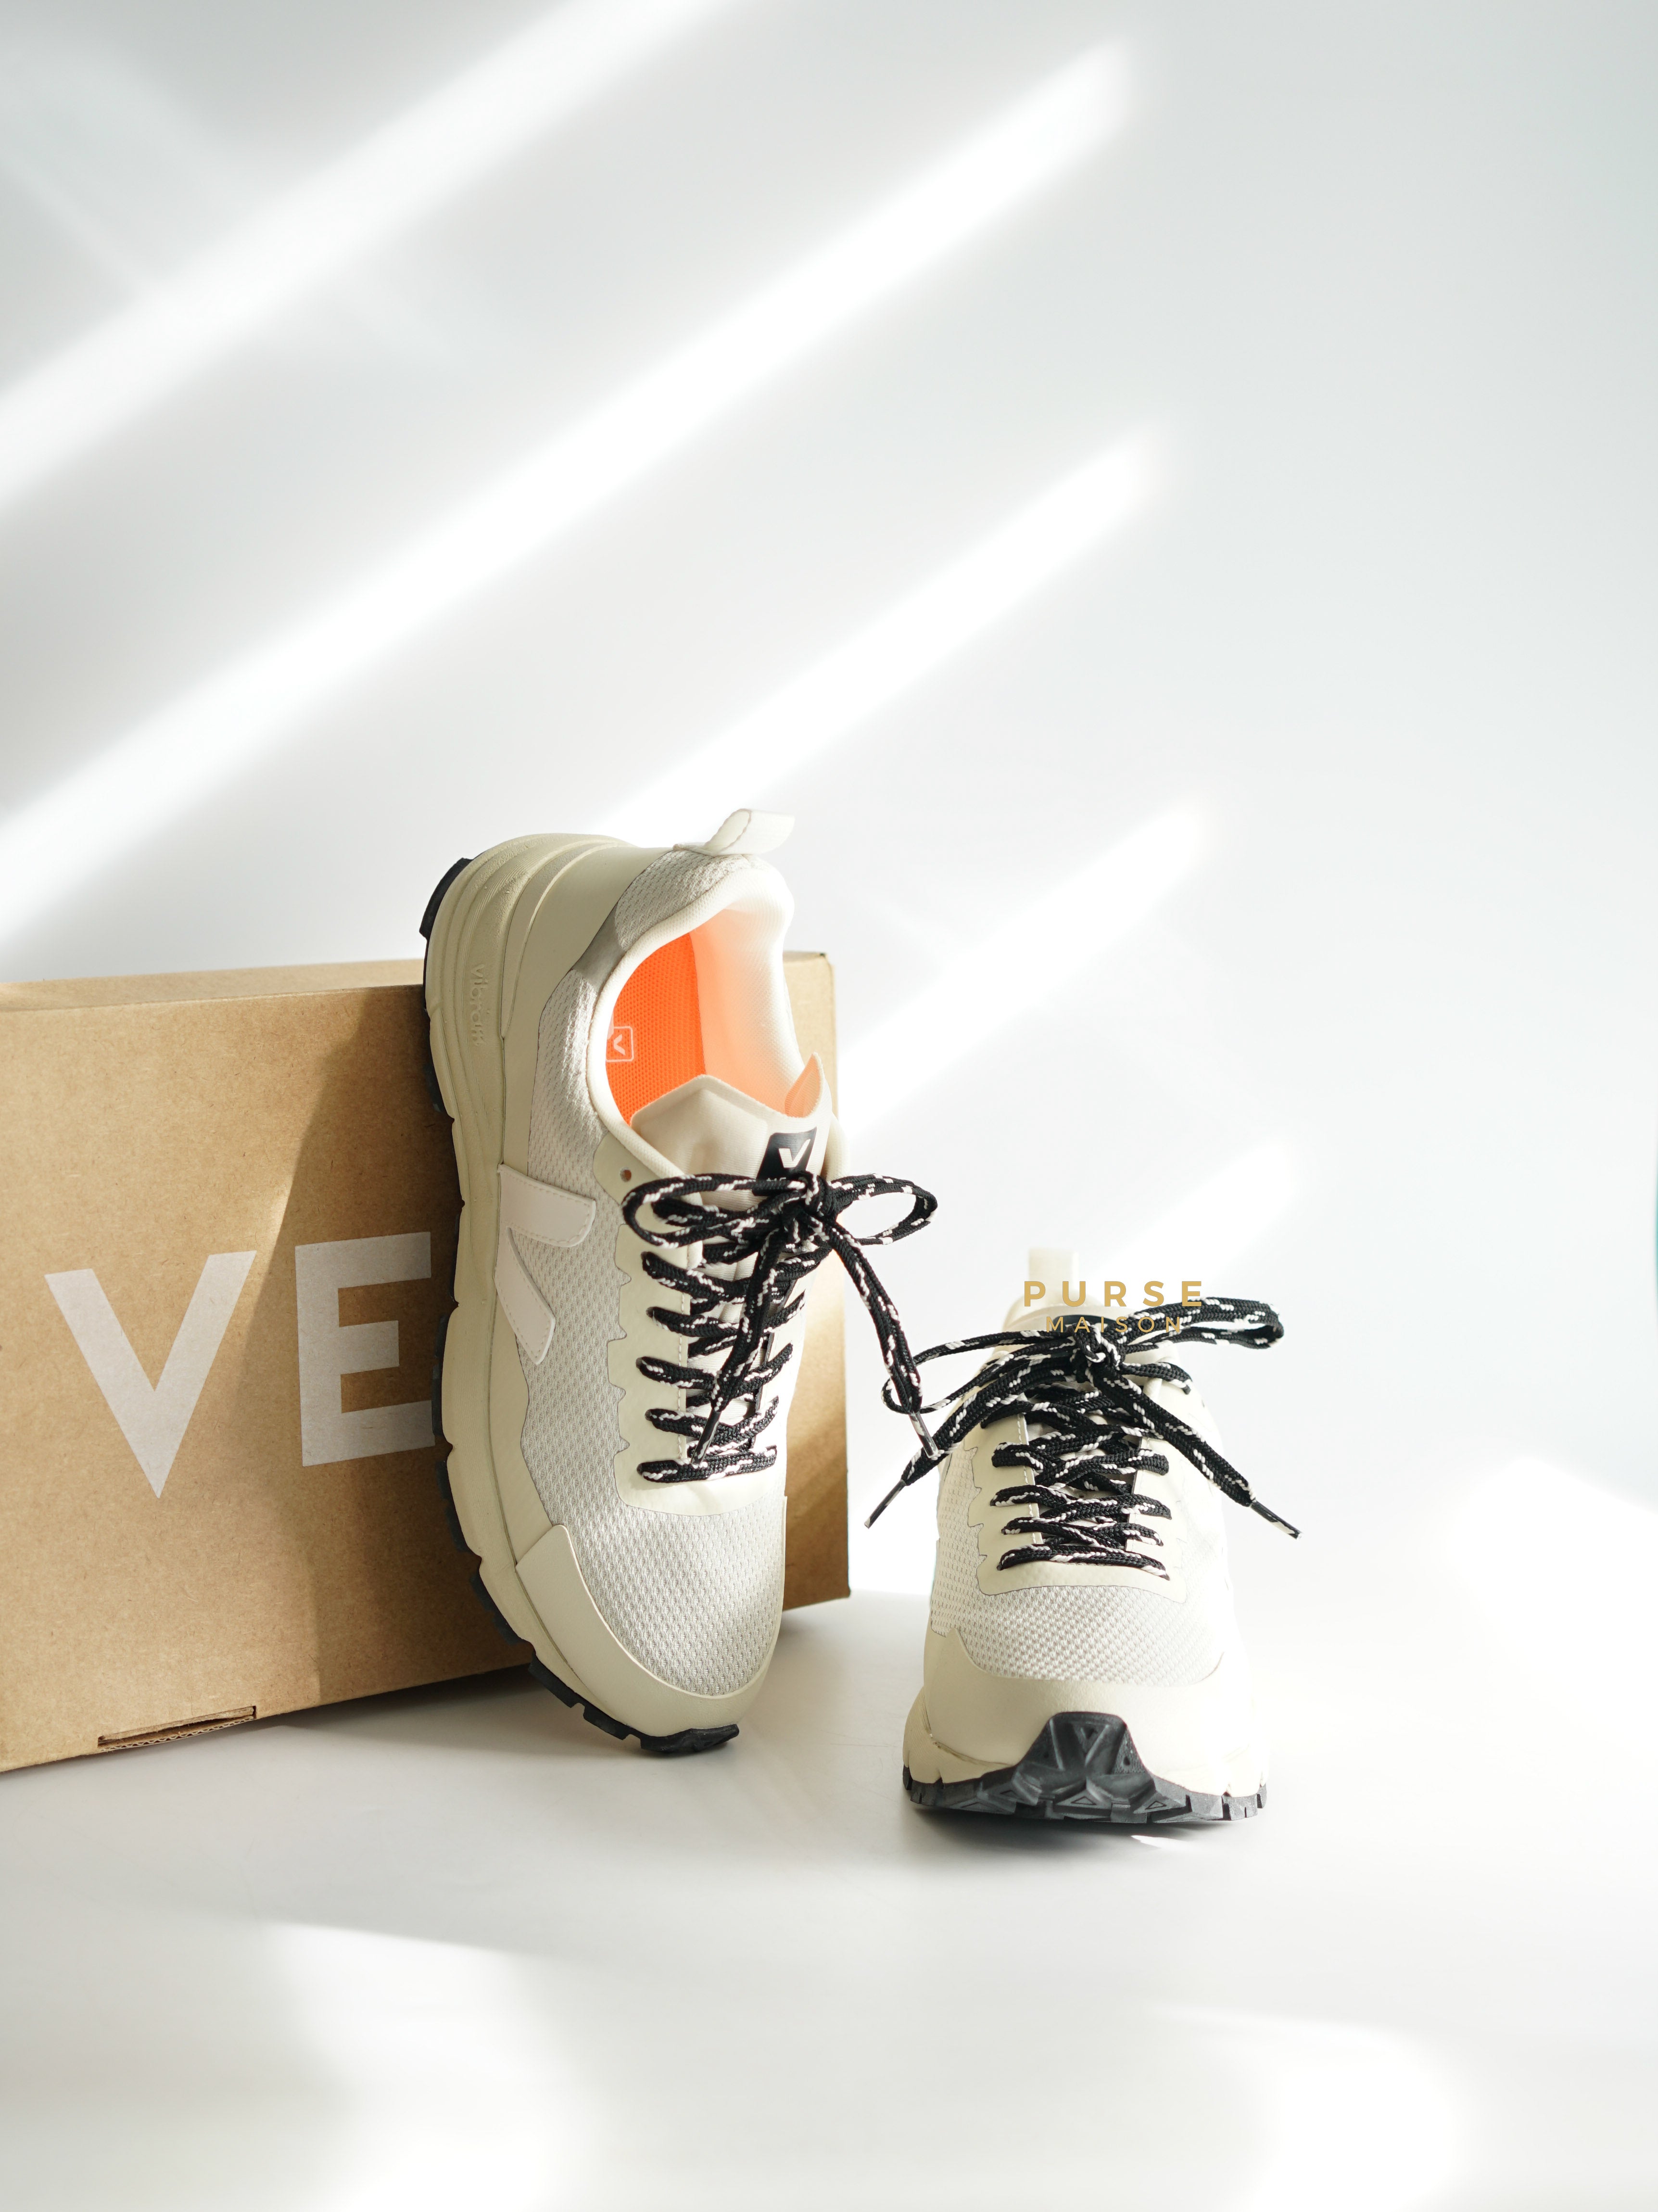 Veja Dekkan Canvas in Natural White Sneakers for Women Size 38 EU (25cm) | Purse Maison Luxury Bags Shop